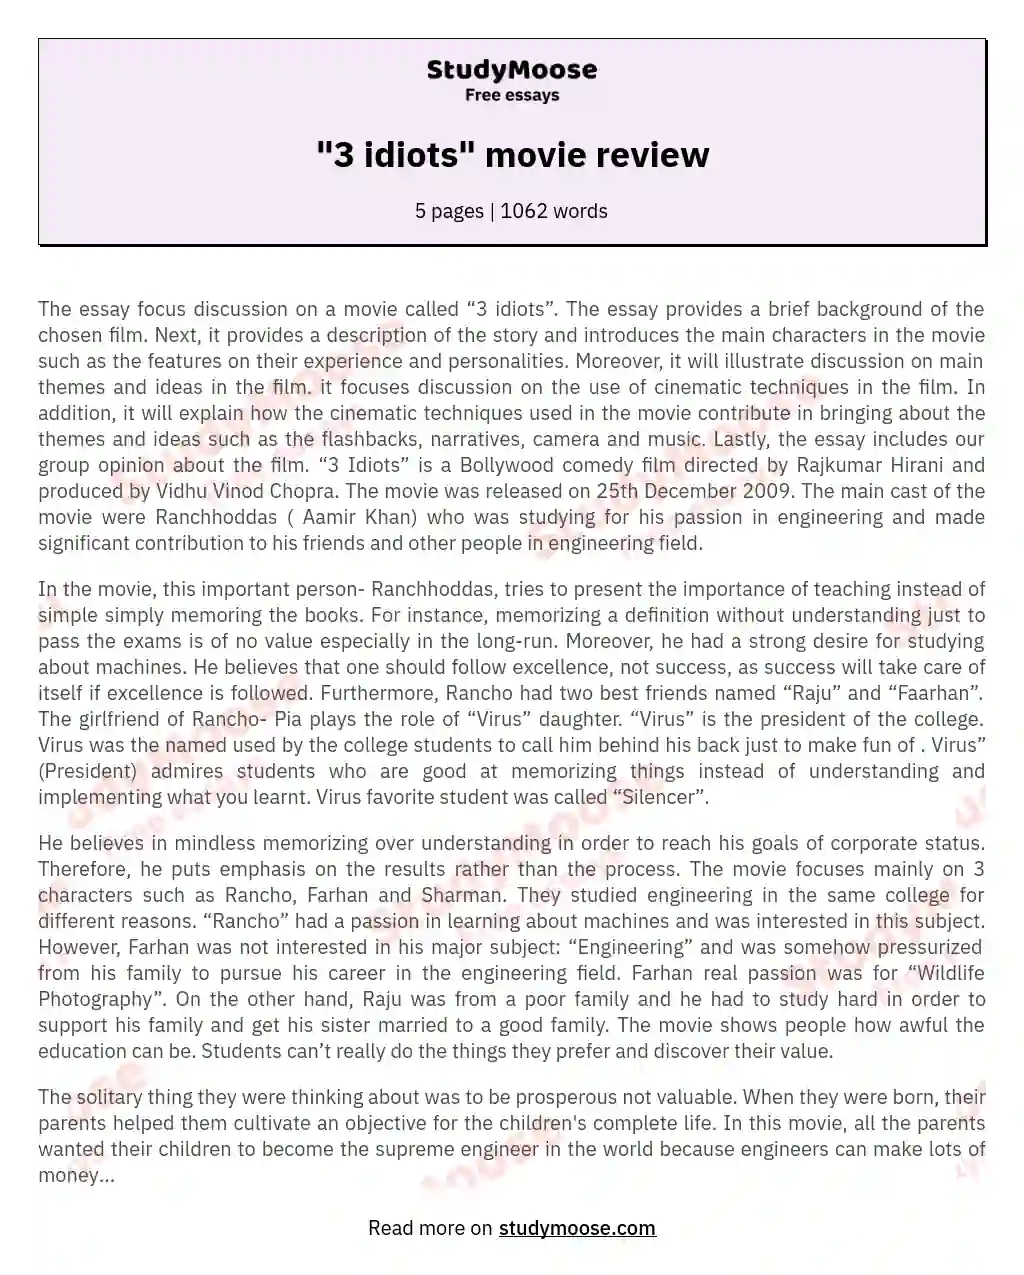 "3 idiots" movie review essay